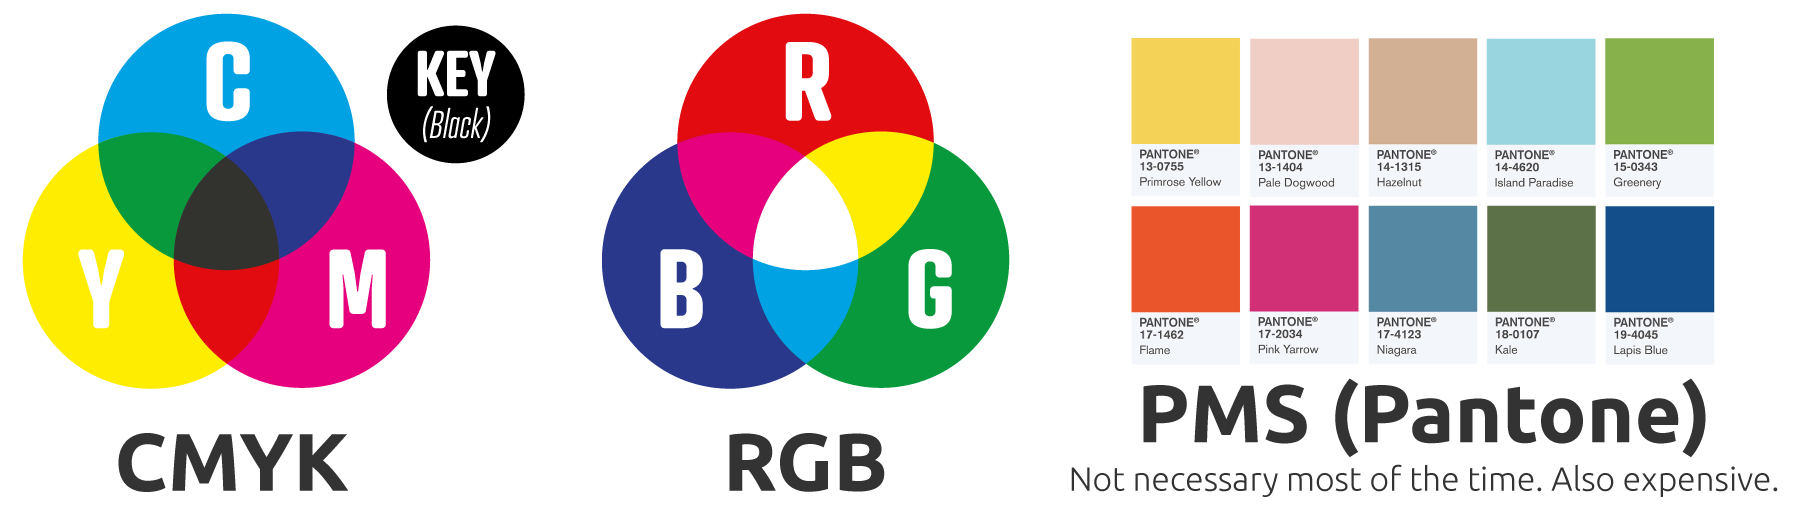 color-systems-comparison